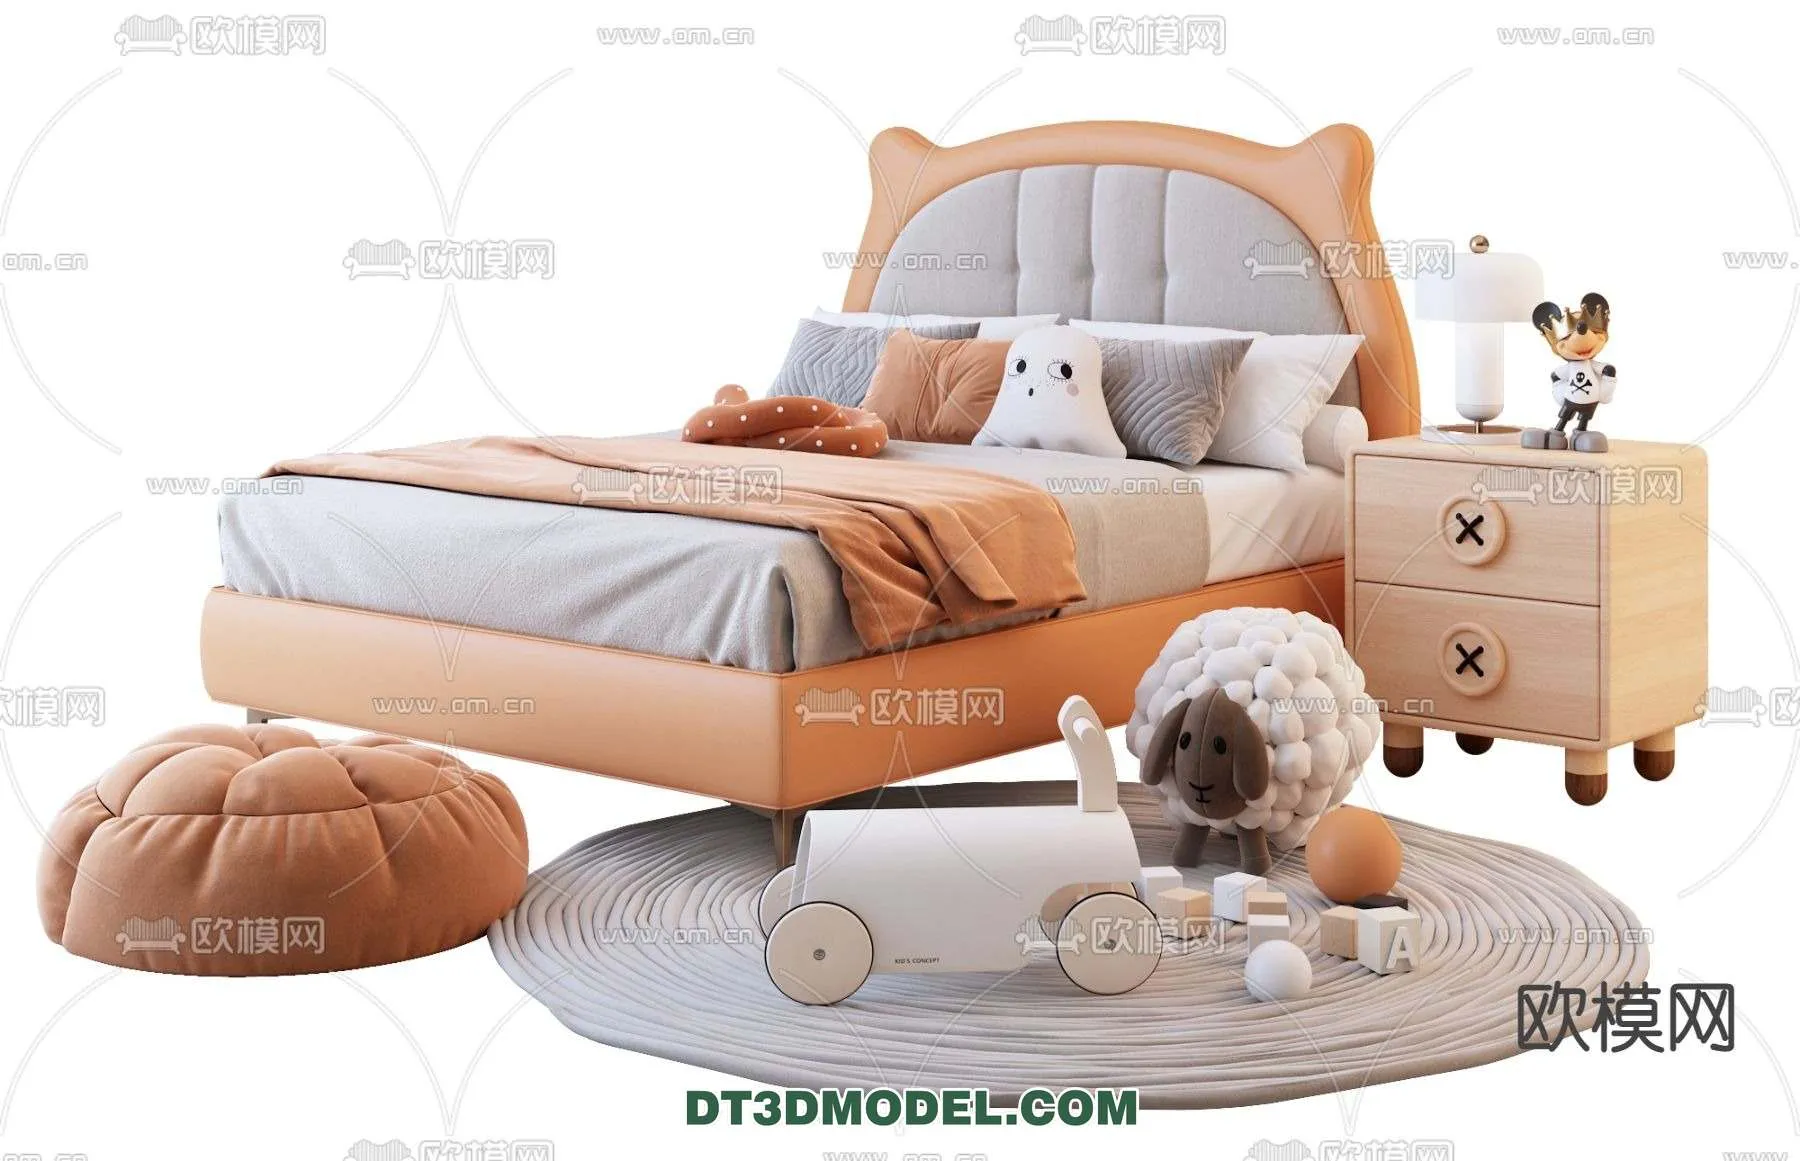 Double Bed 3D Models – 0058